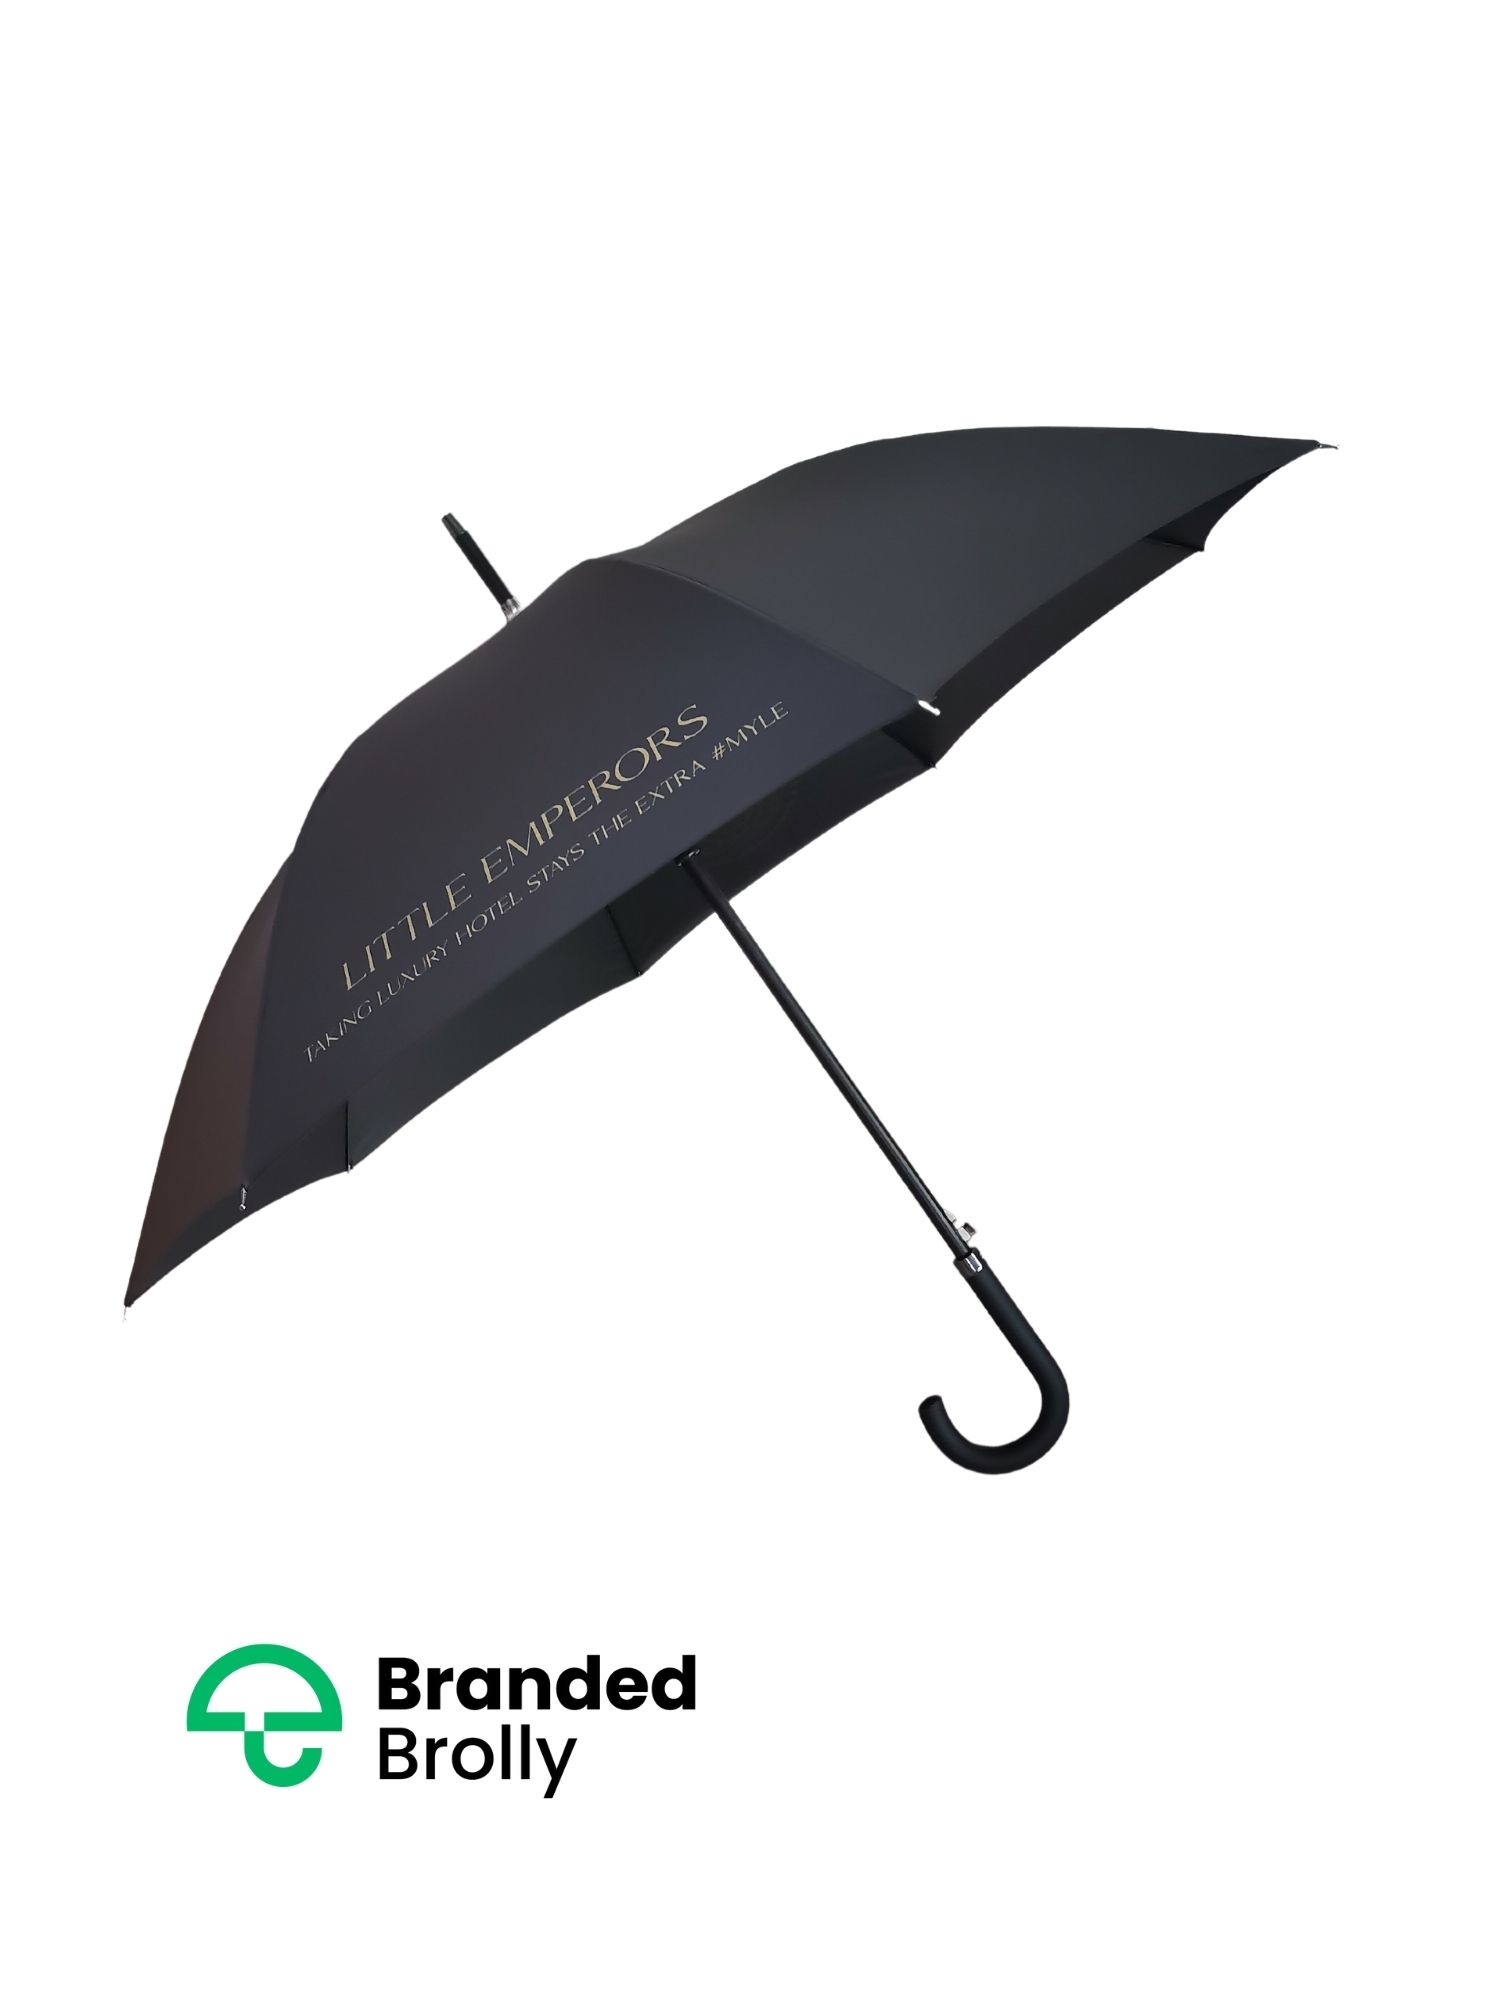 Branded Walker Pro City Umbrellas